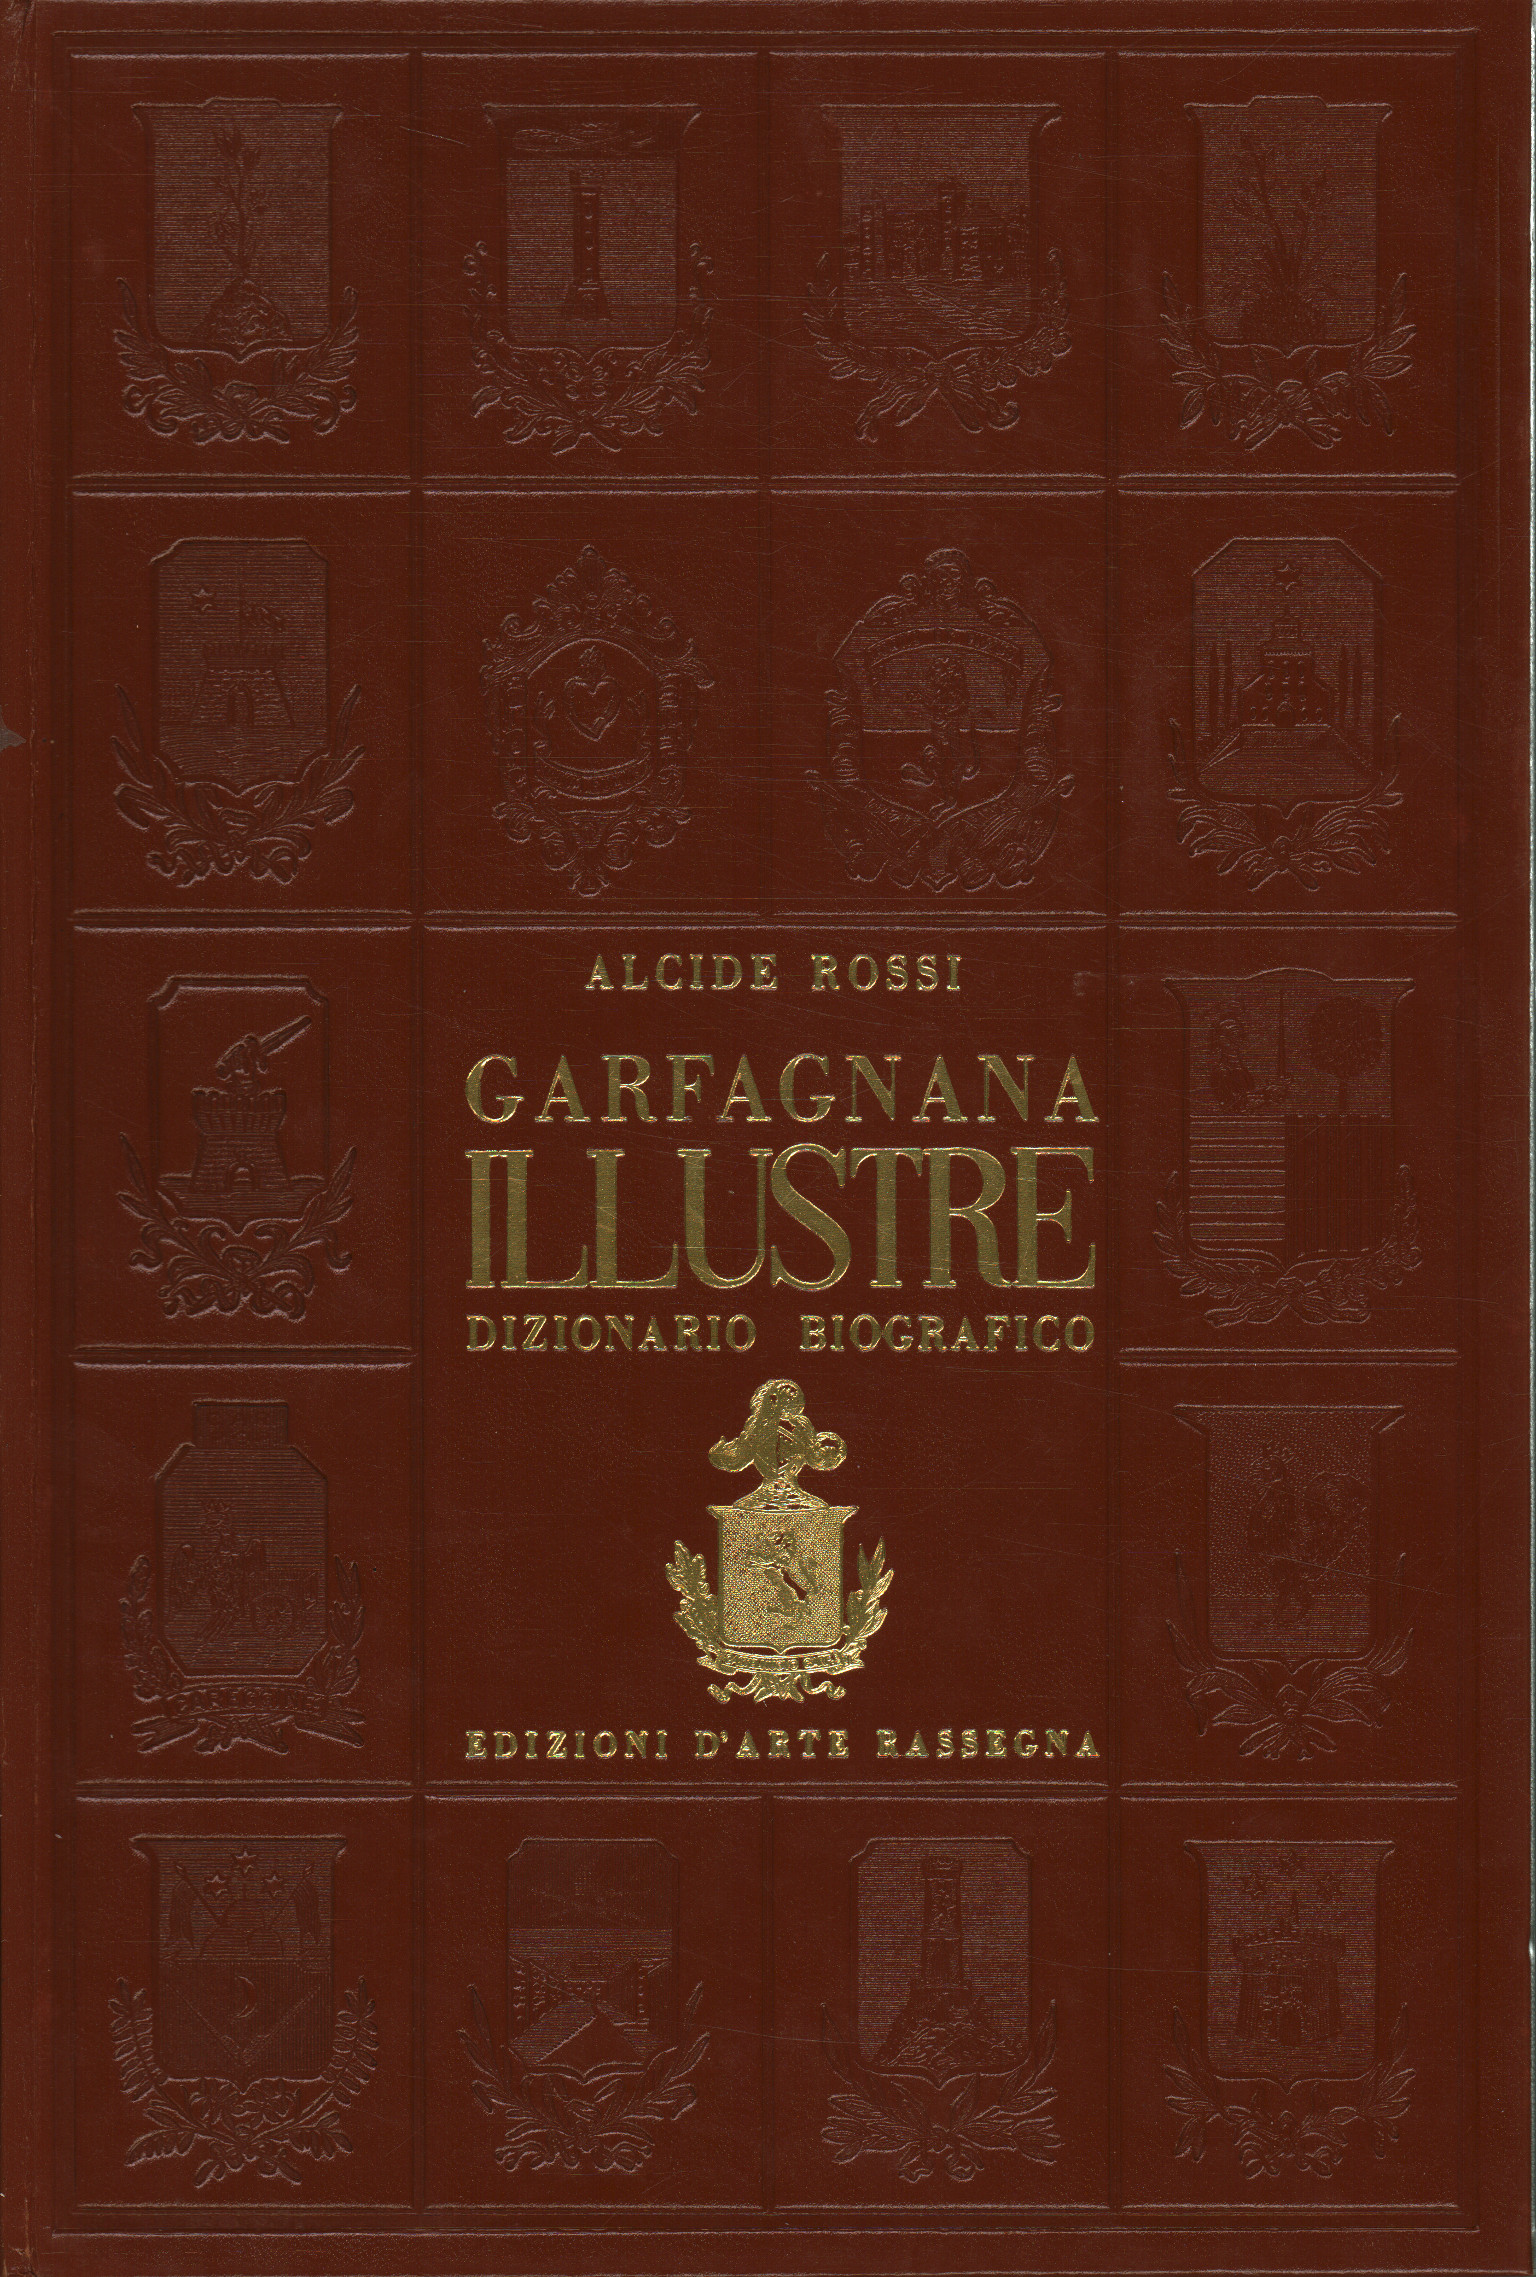 Illustrious Garfagnana. Biographical Dictionary